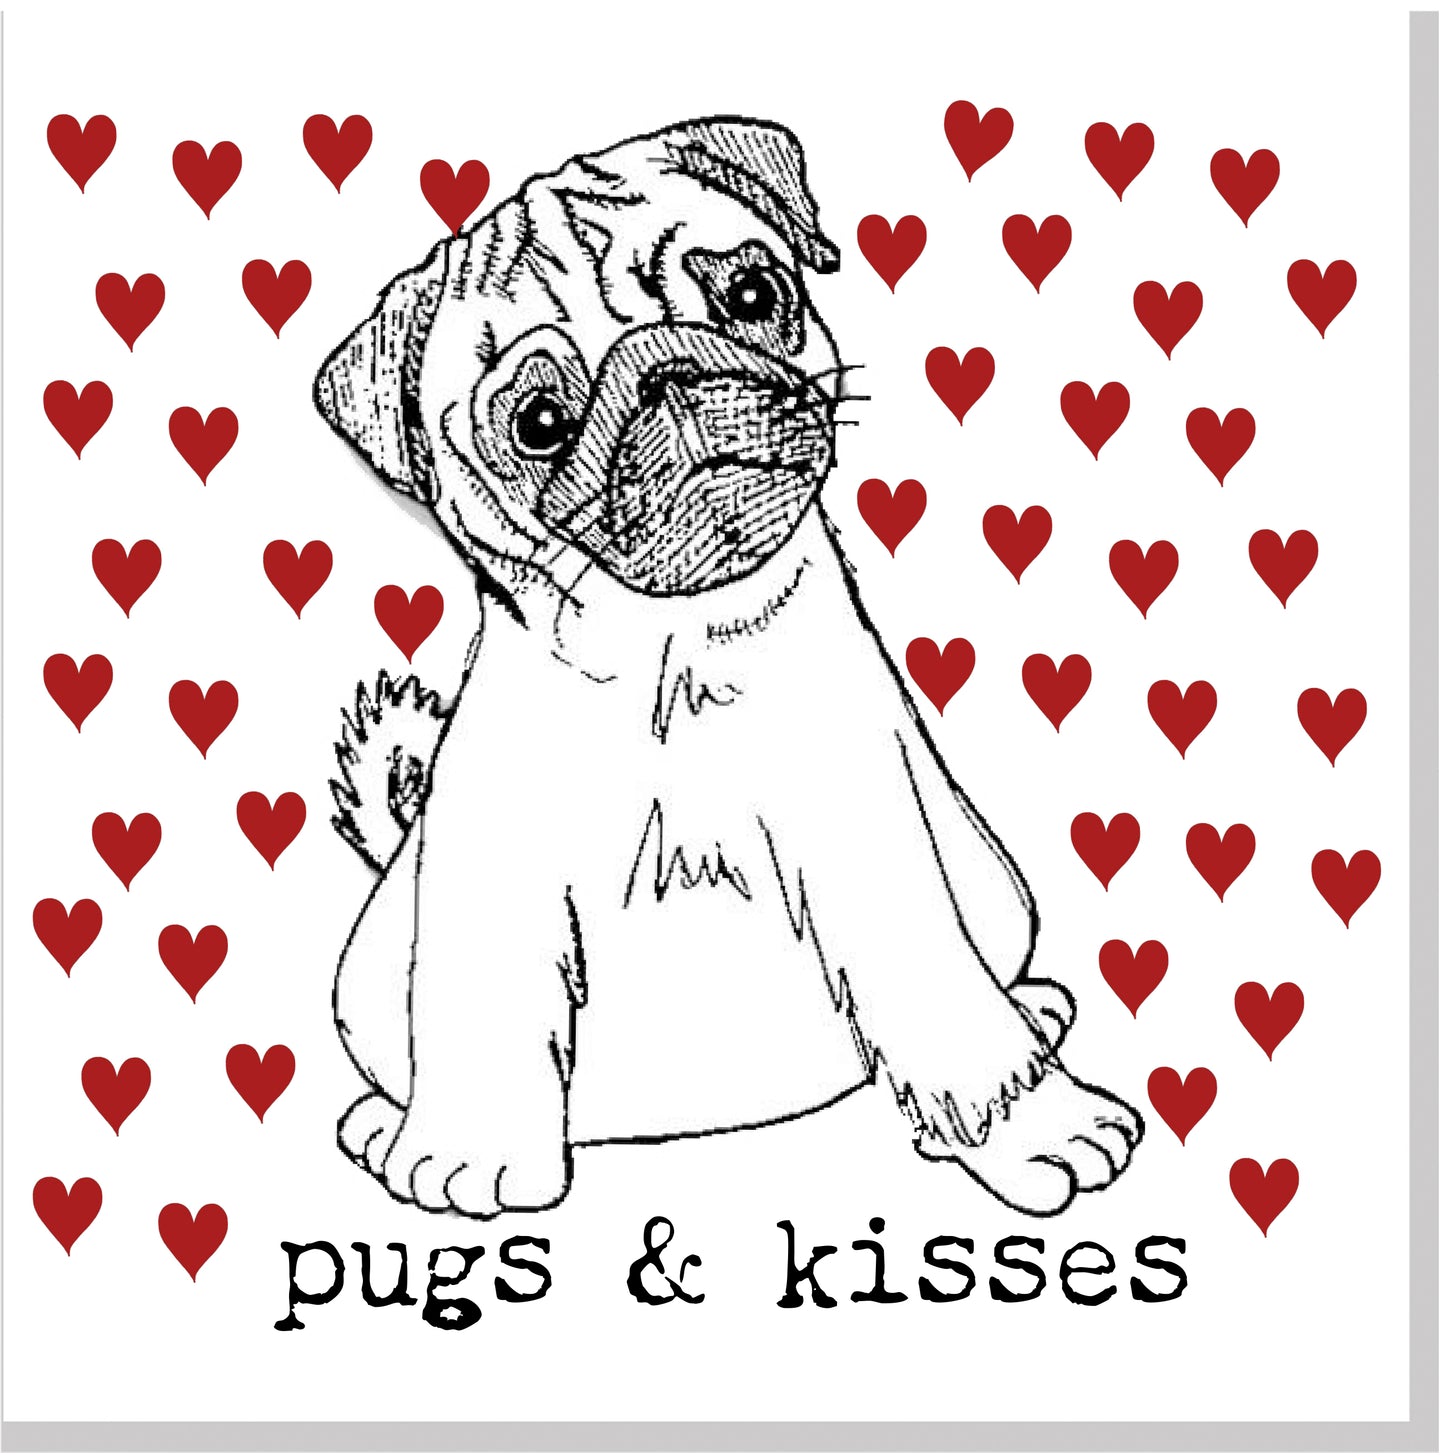 Pugs & Kisses square card